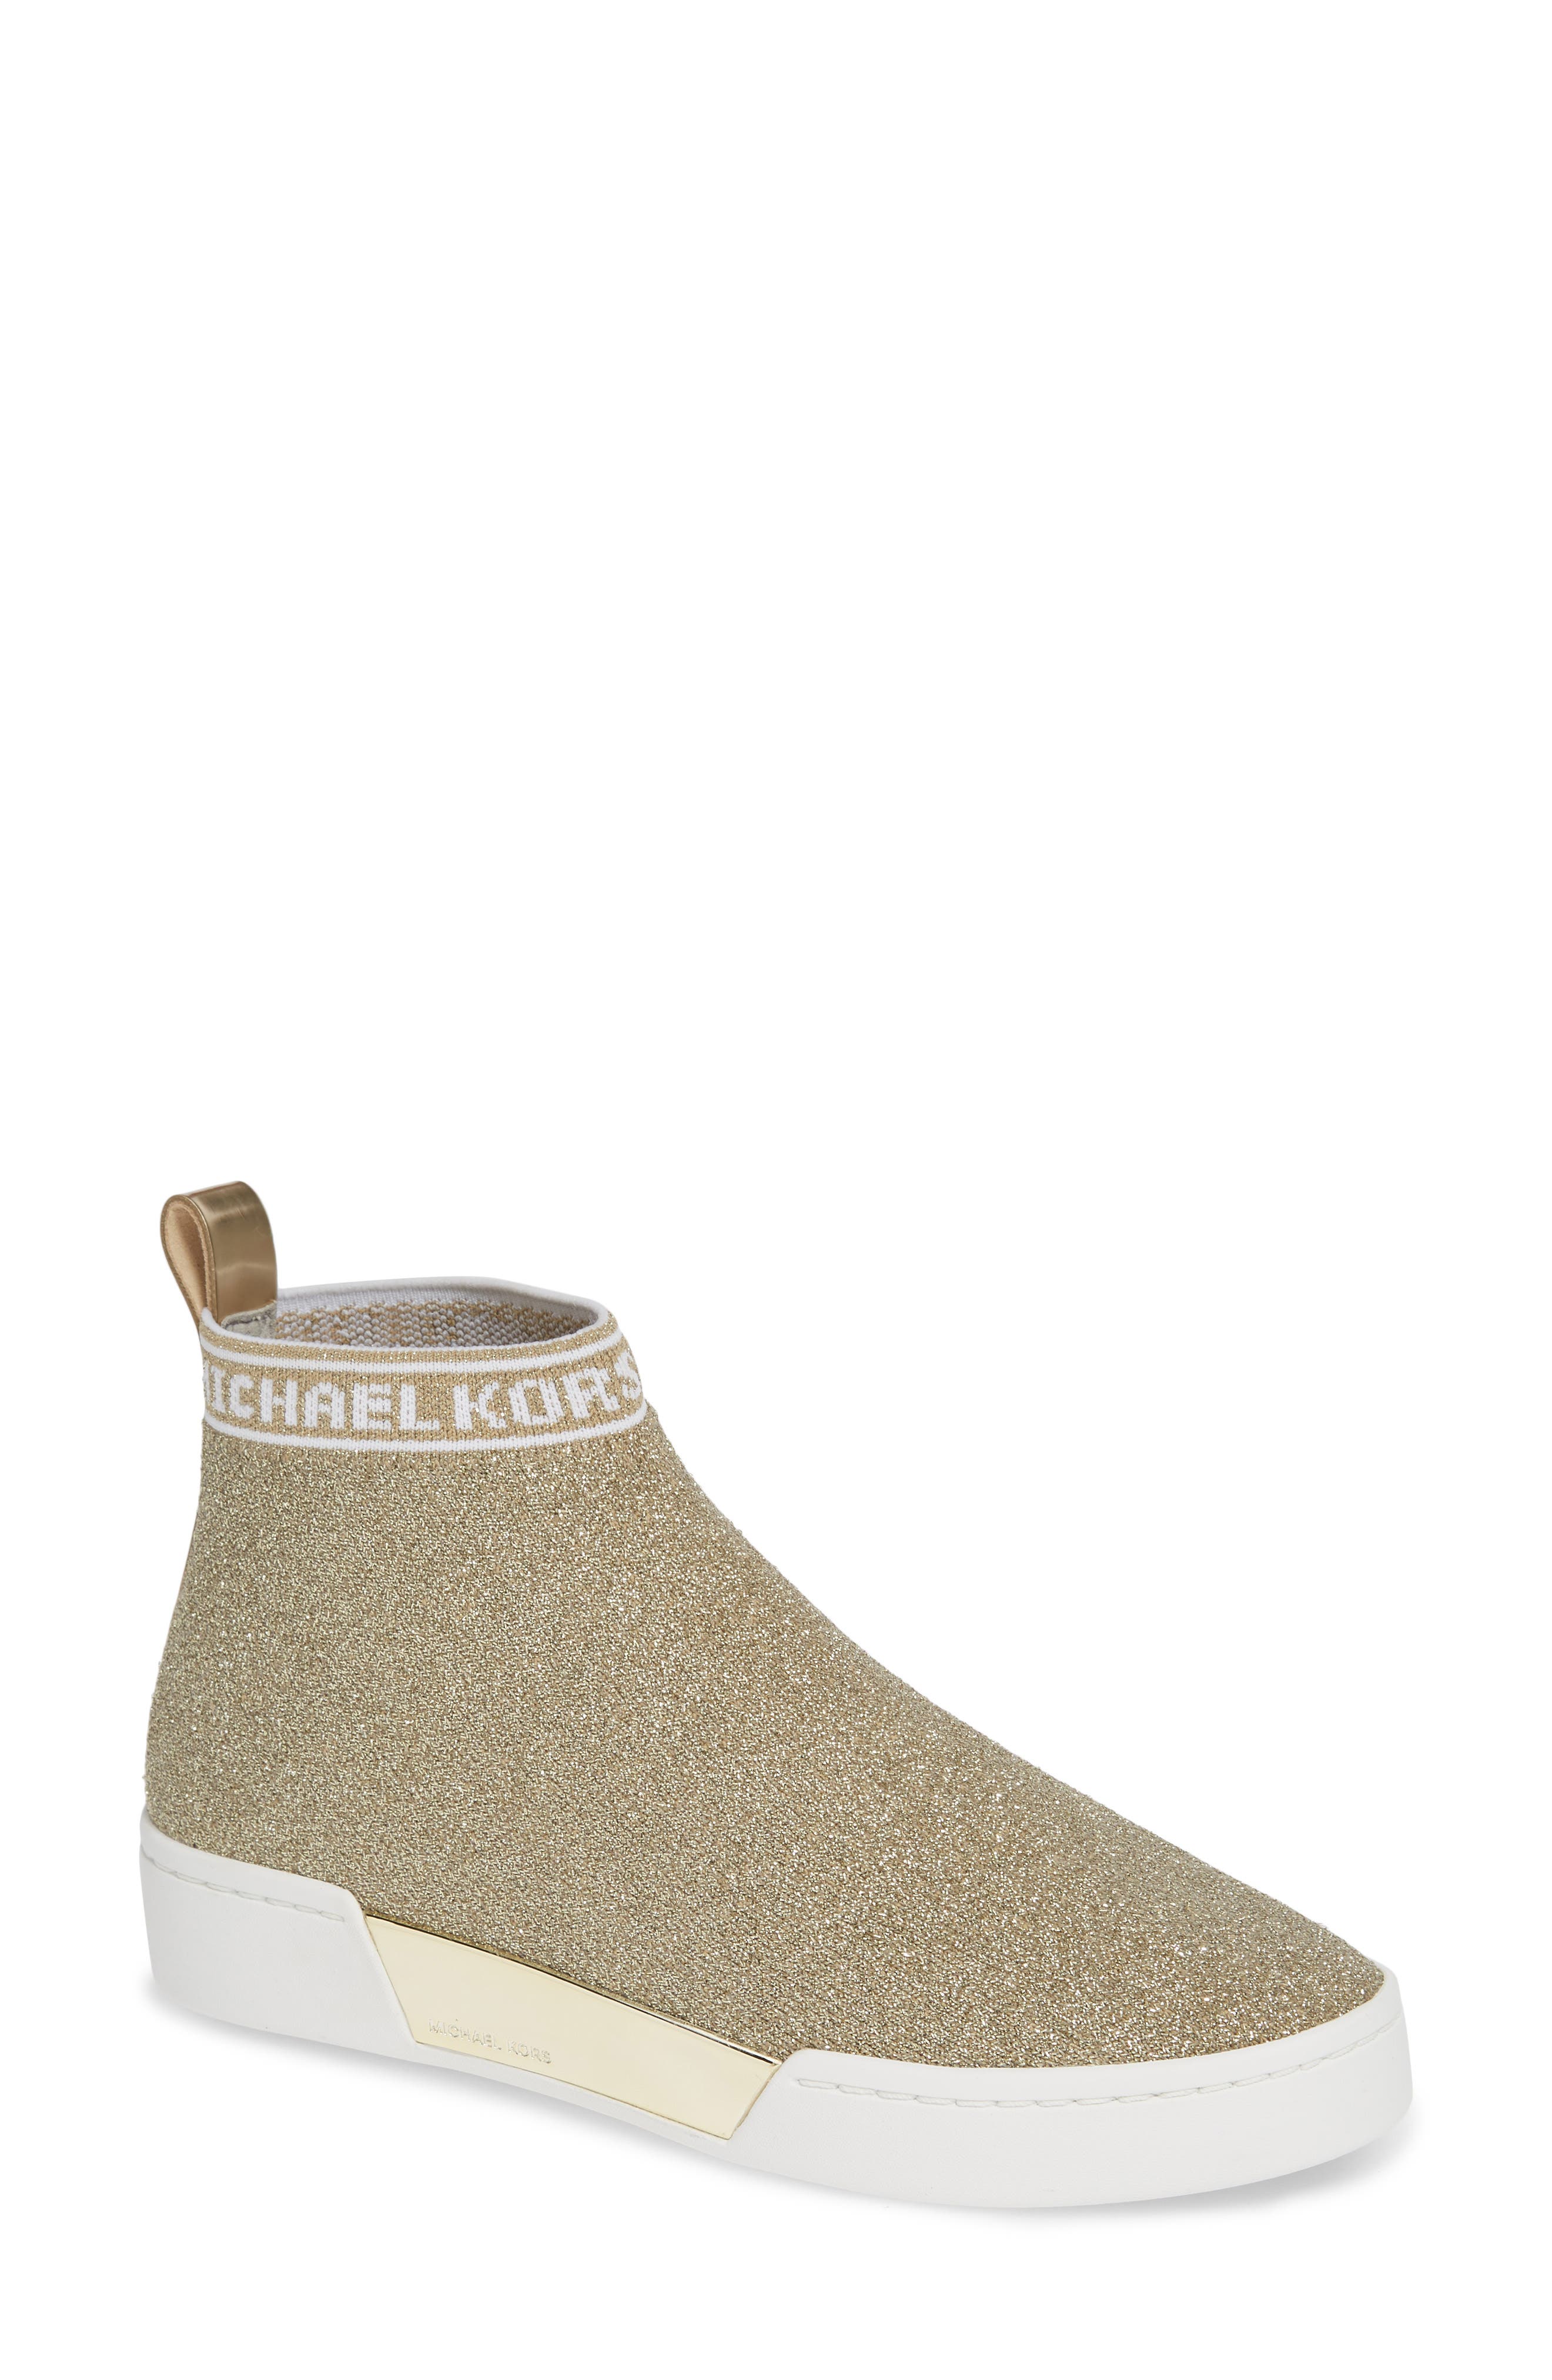 UPC 192837069470 product image for Women's Michael Michael Kors Grover Sneaker, Size 6.5 M - Metallic | upcitemdb.com